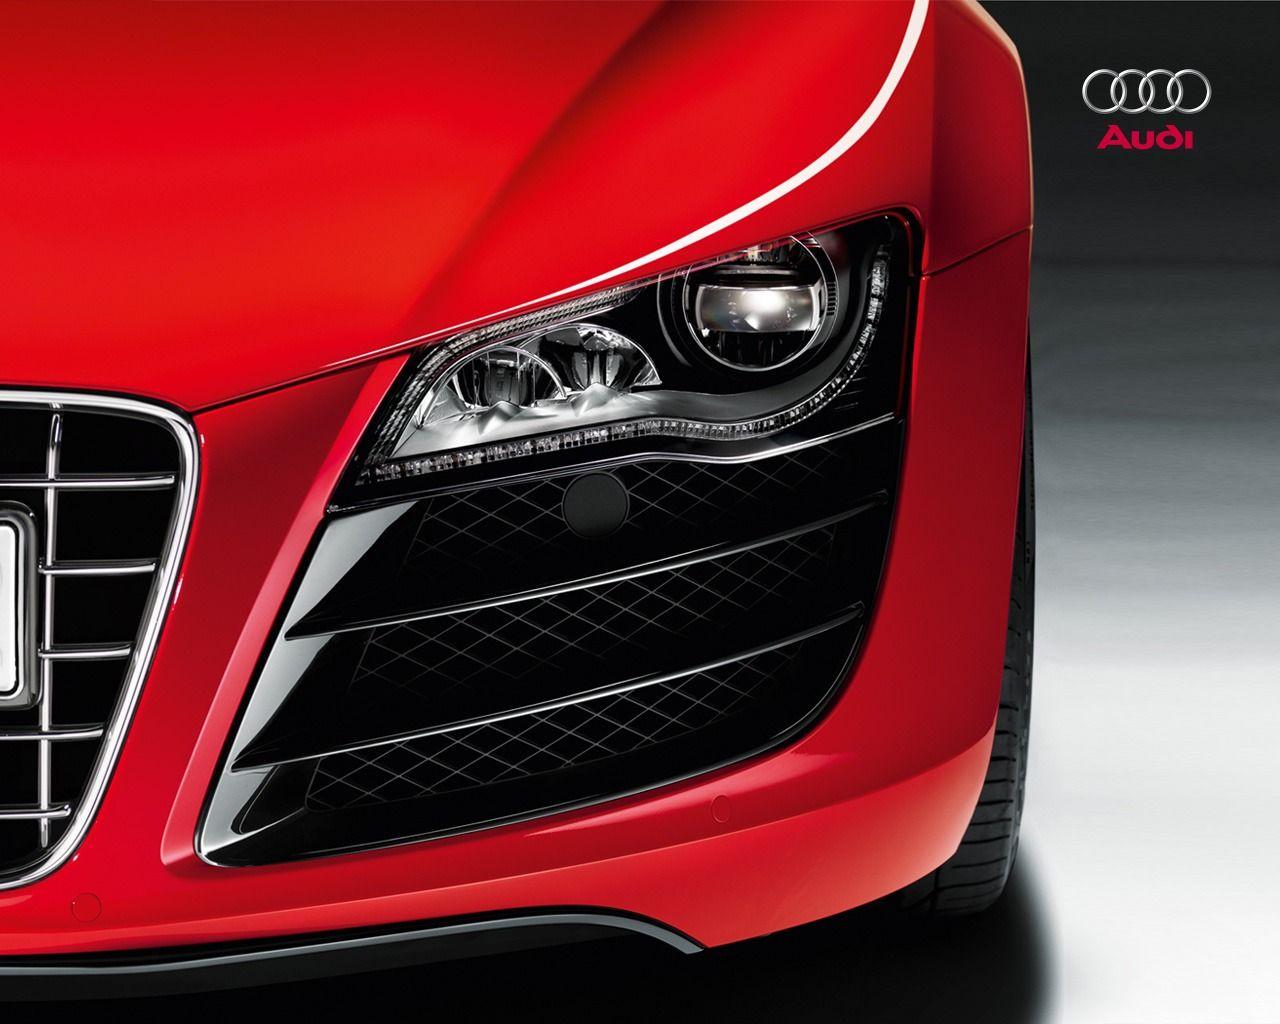 R8 V10 Logo - Audi R8 V10 5.2 FSI Quattro: full details revealed